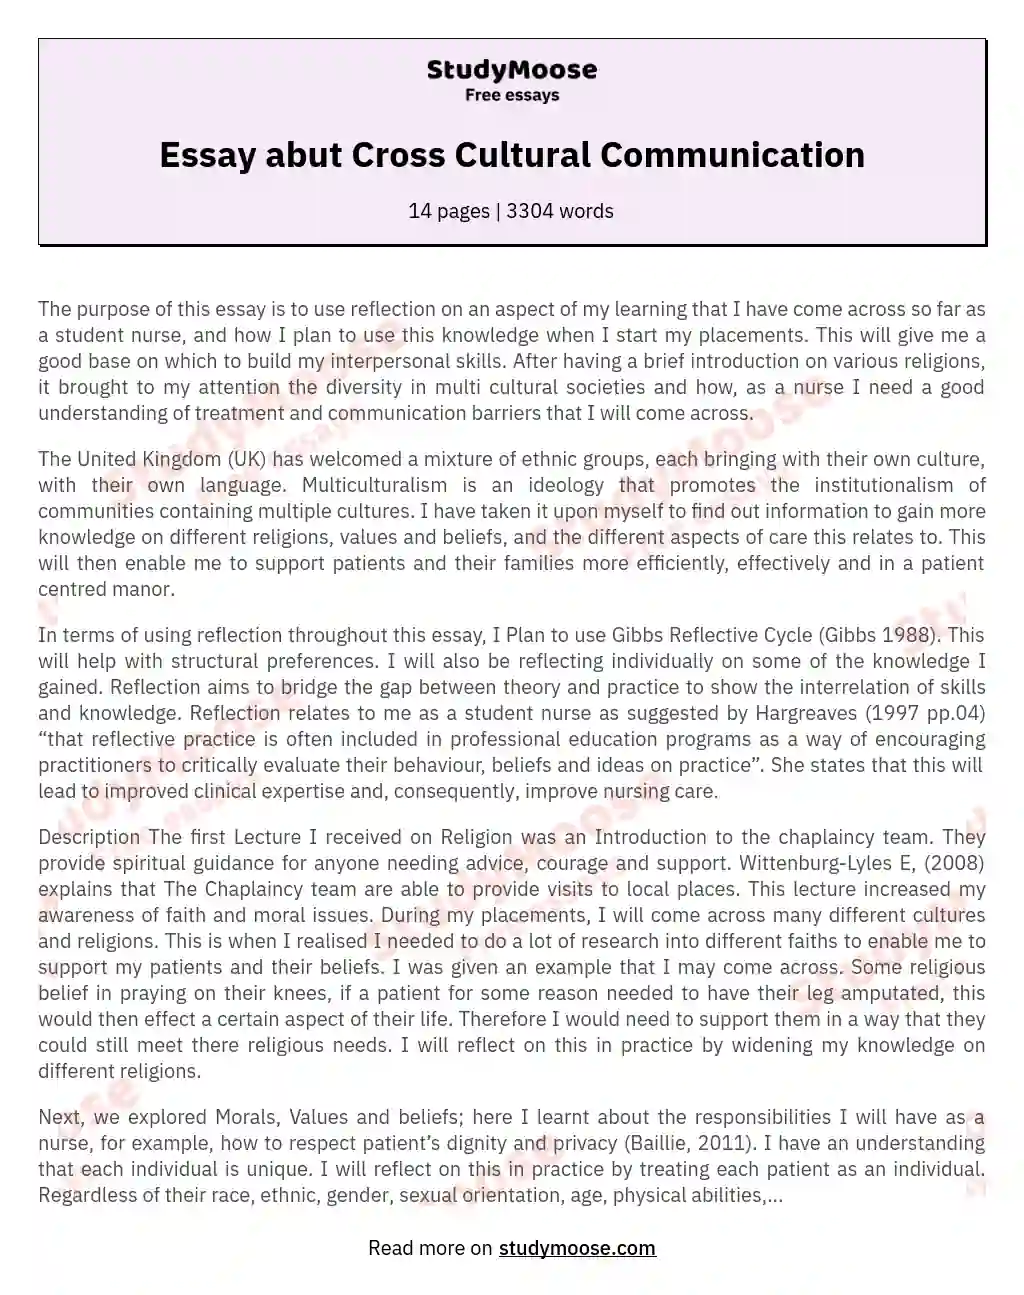 Essay abut Cross Cultural Communication essay